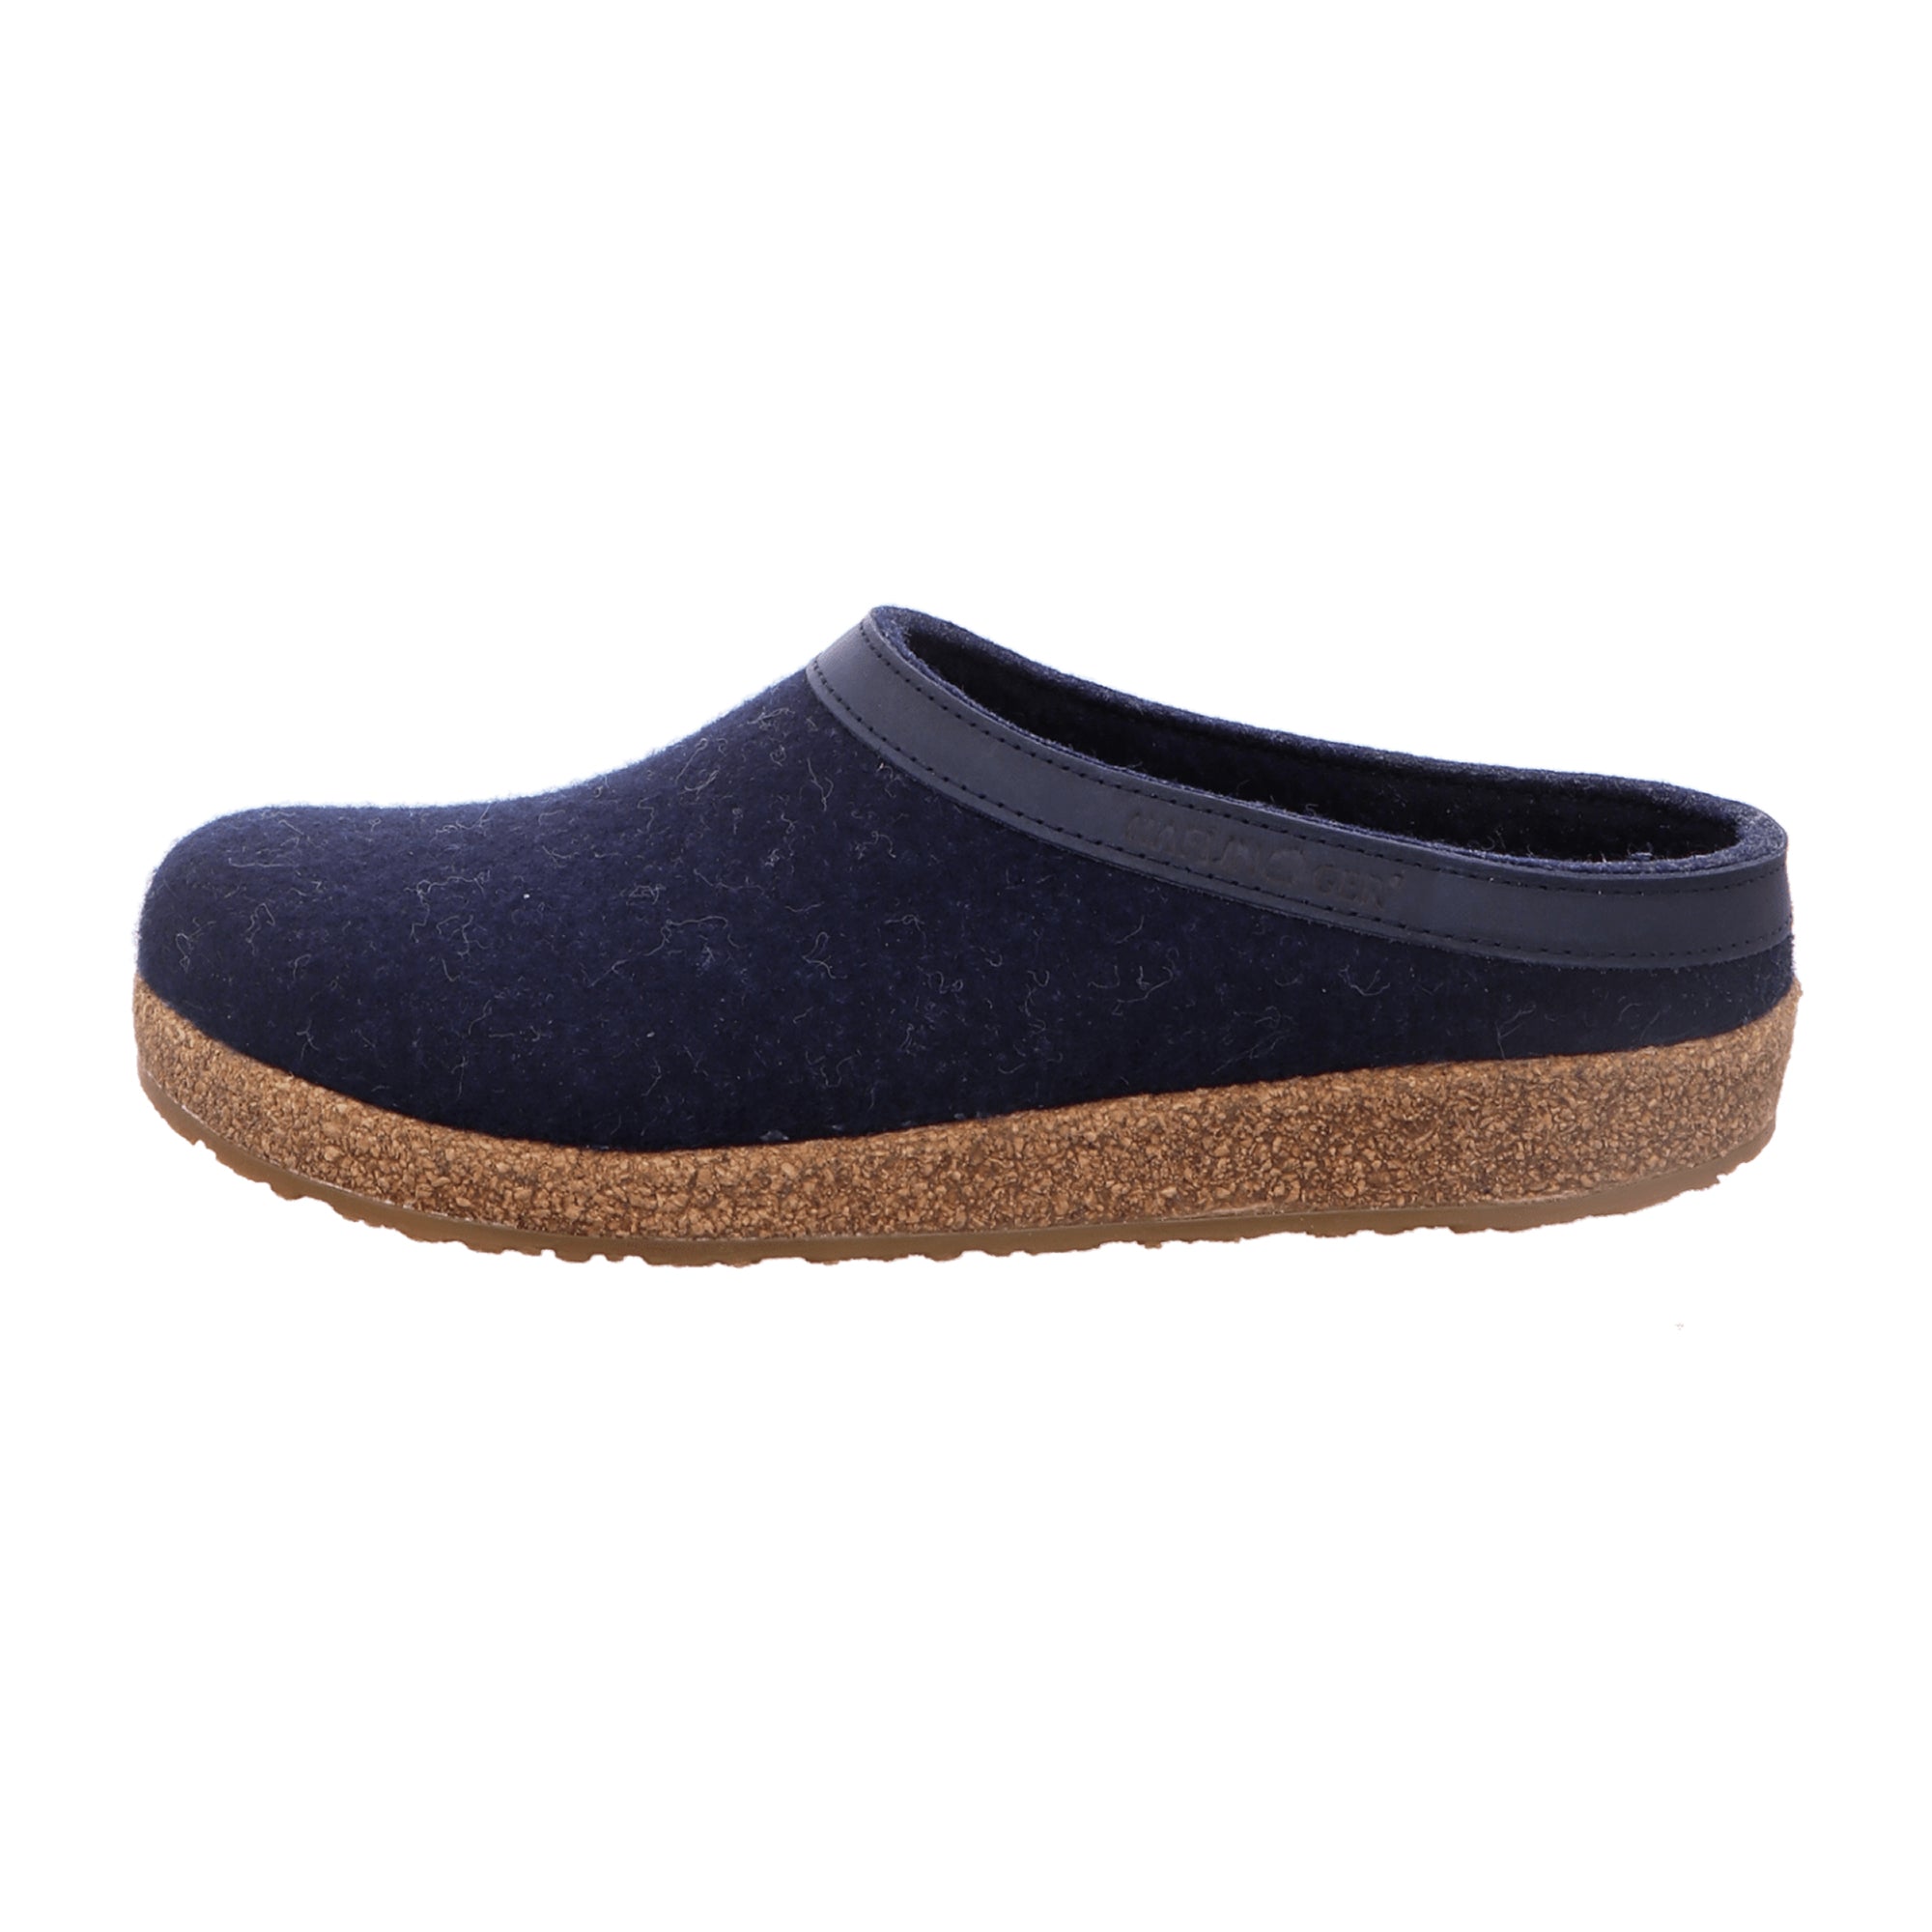 Haflinger Grizzly Torben Men's Slippers - Stylish Medium Blue Comfort Footwear